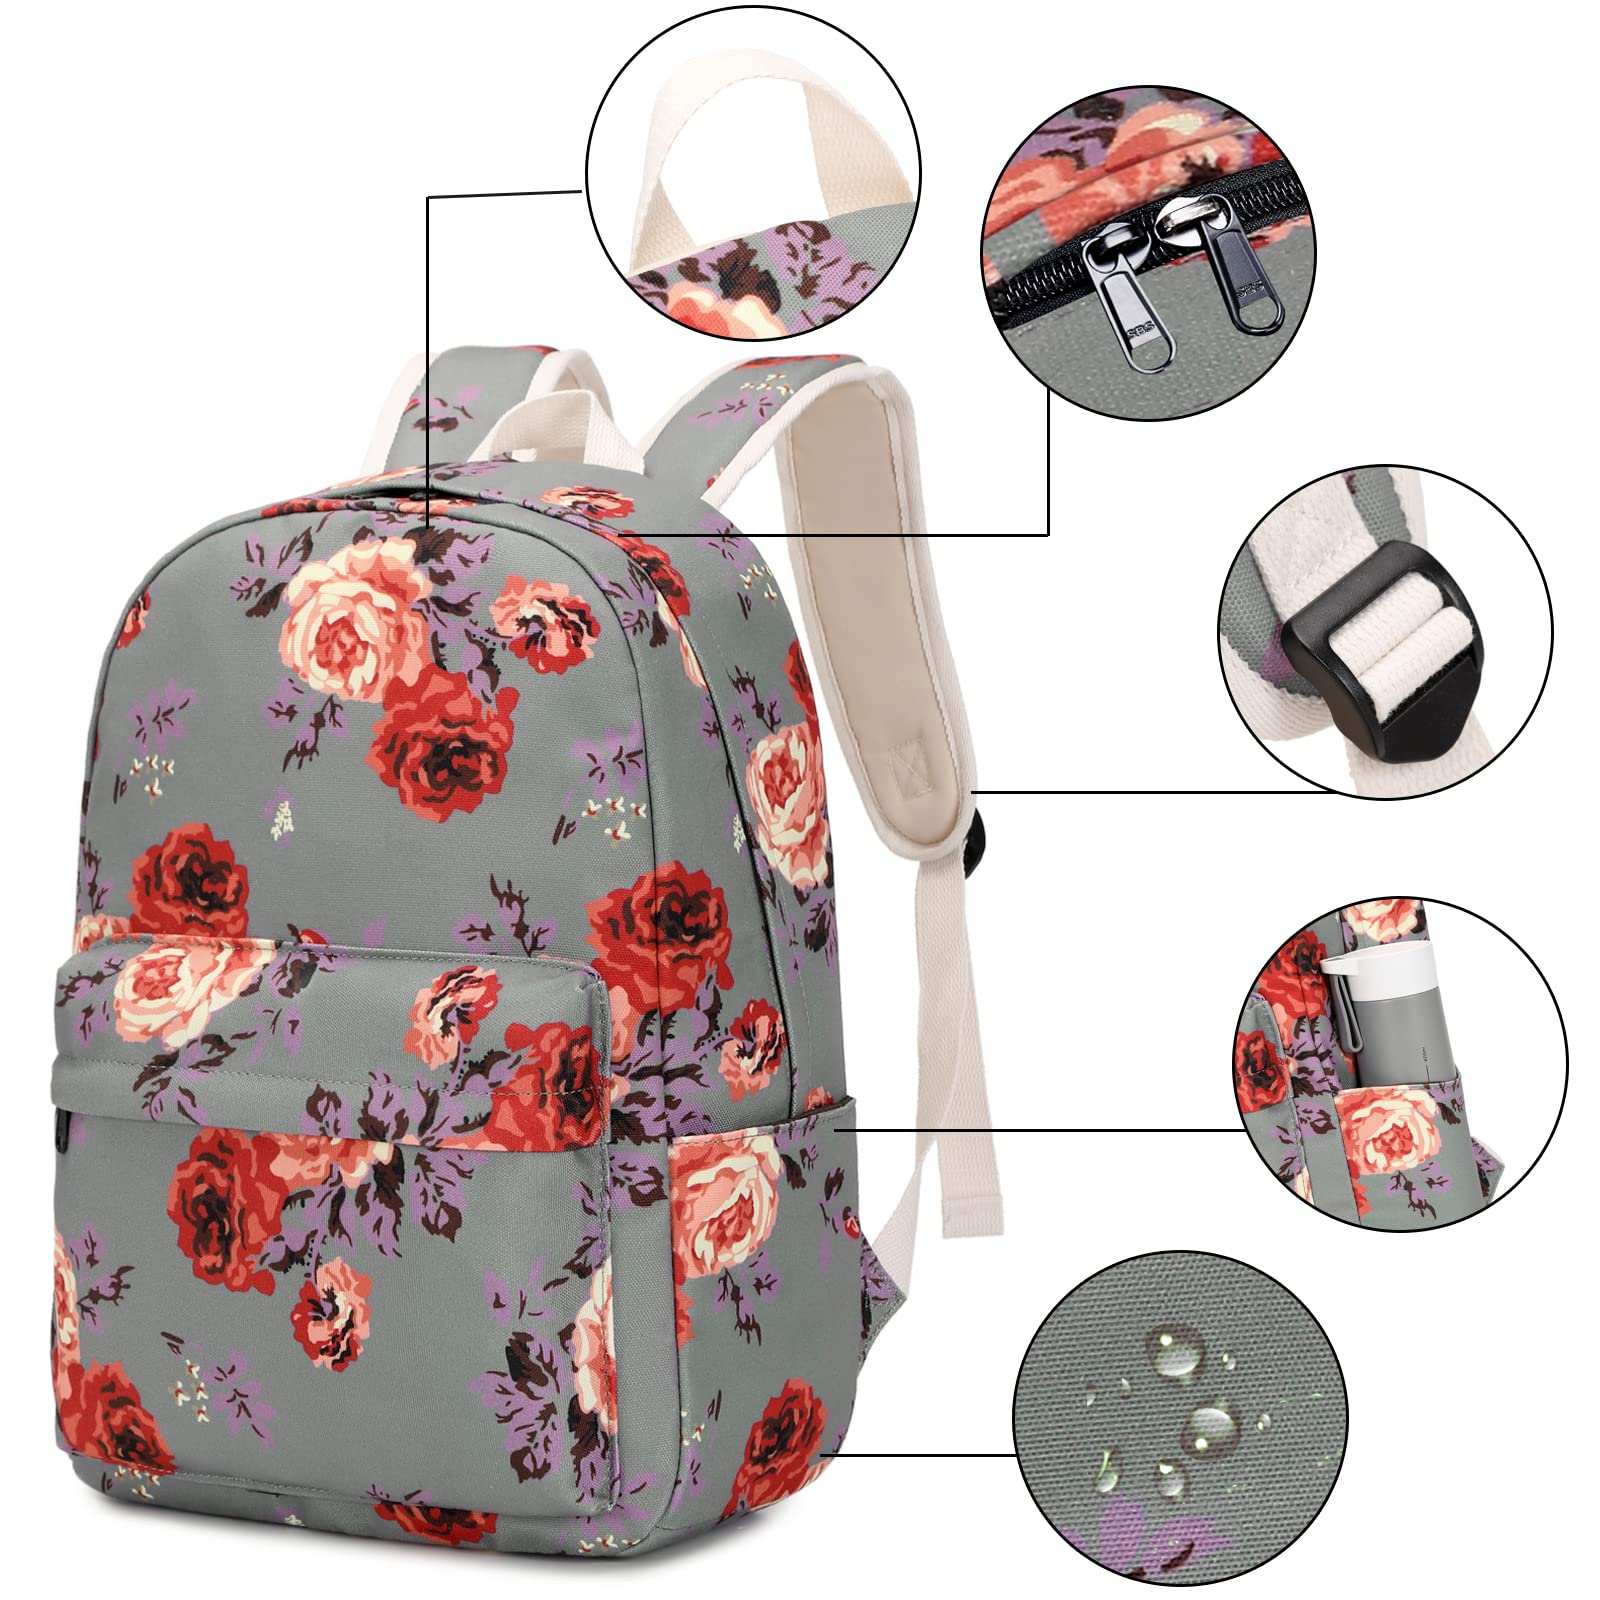 Goodking Canvas Backpack for Women Teen Girls School Rucksack College Bookbag Lady Travel Backpack 14inch Laptop Bag